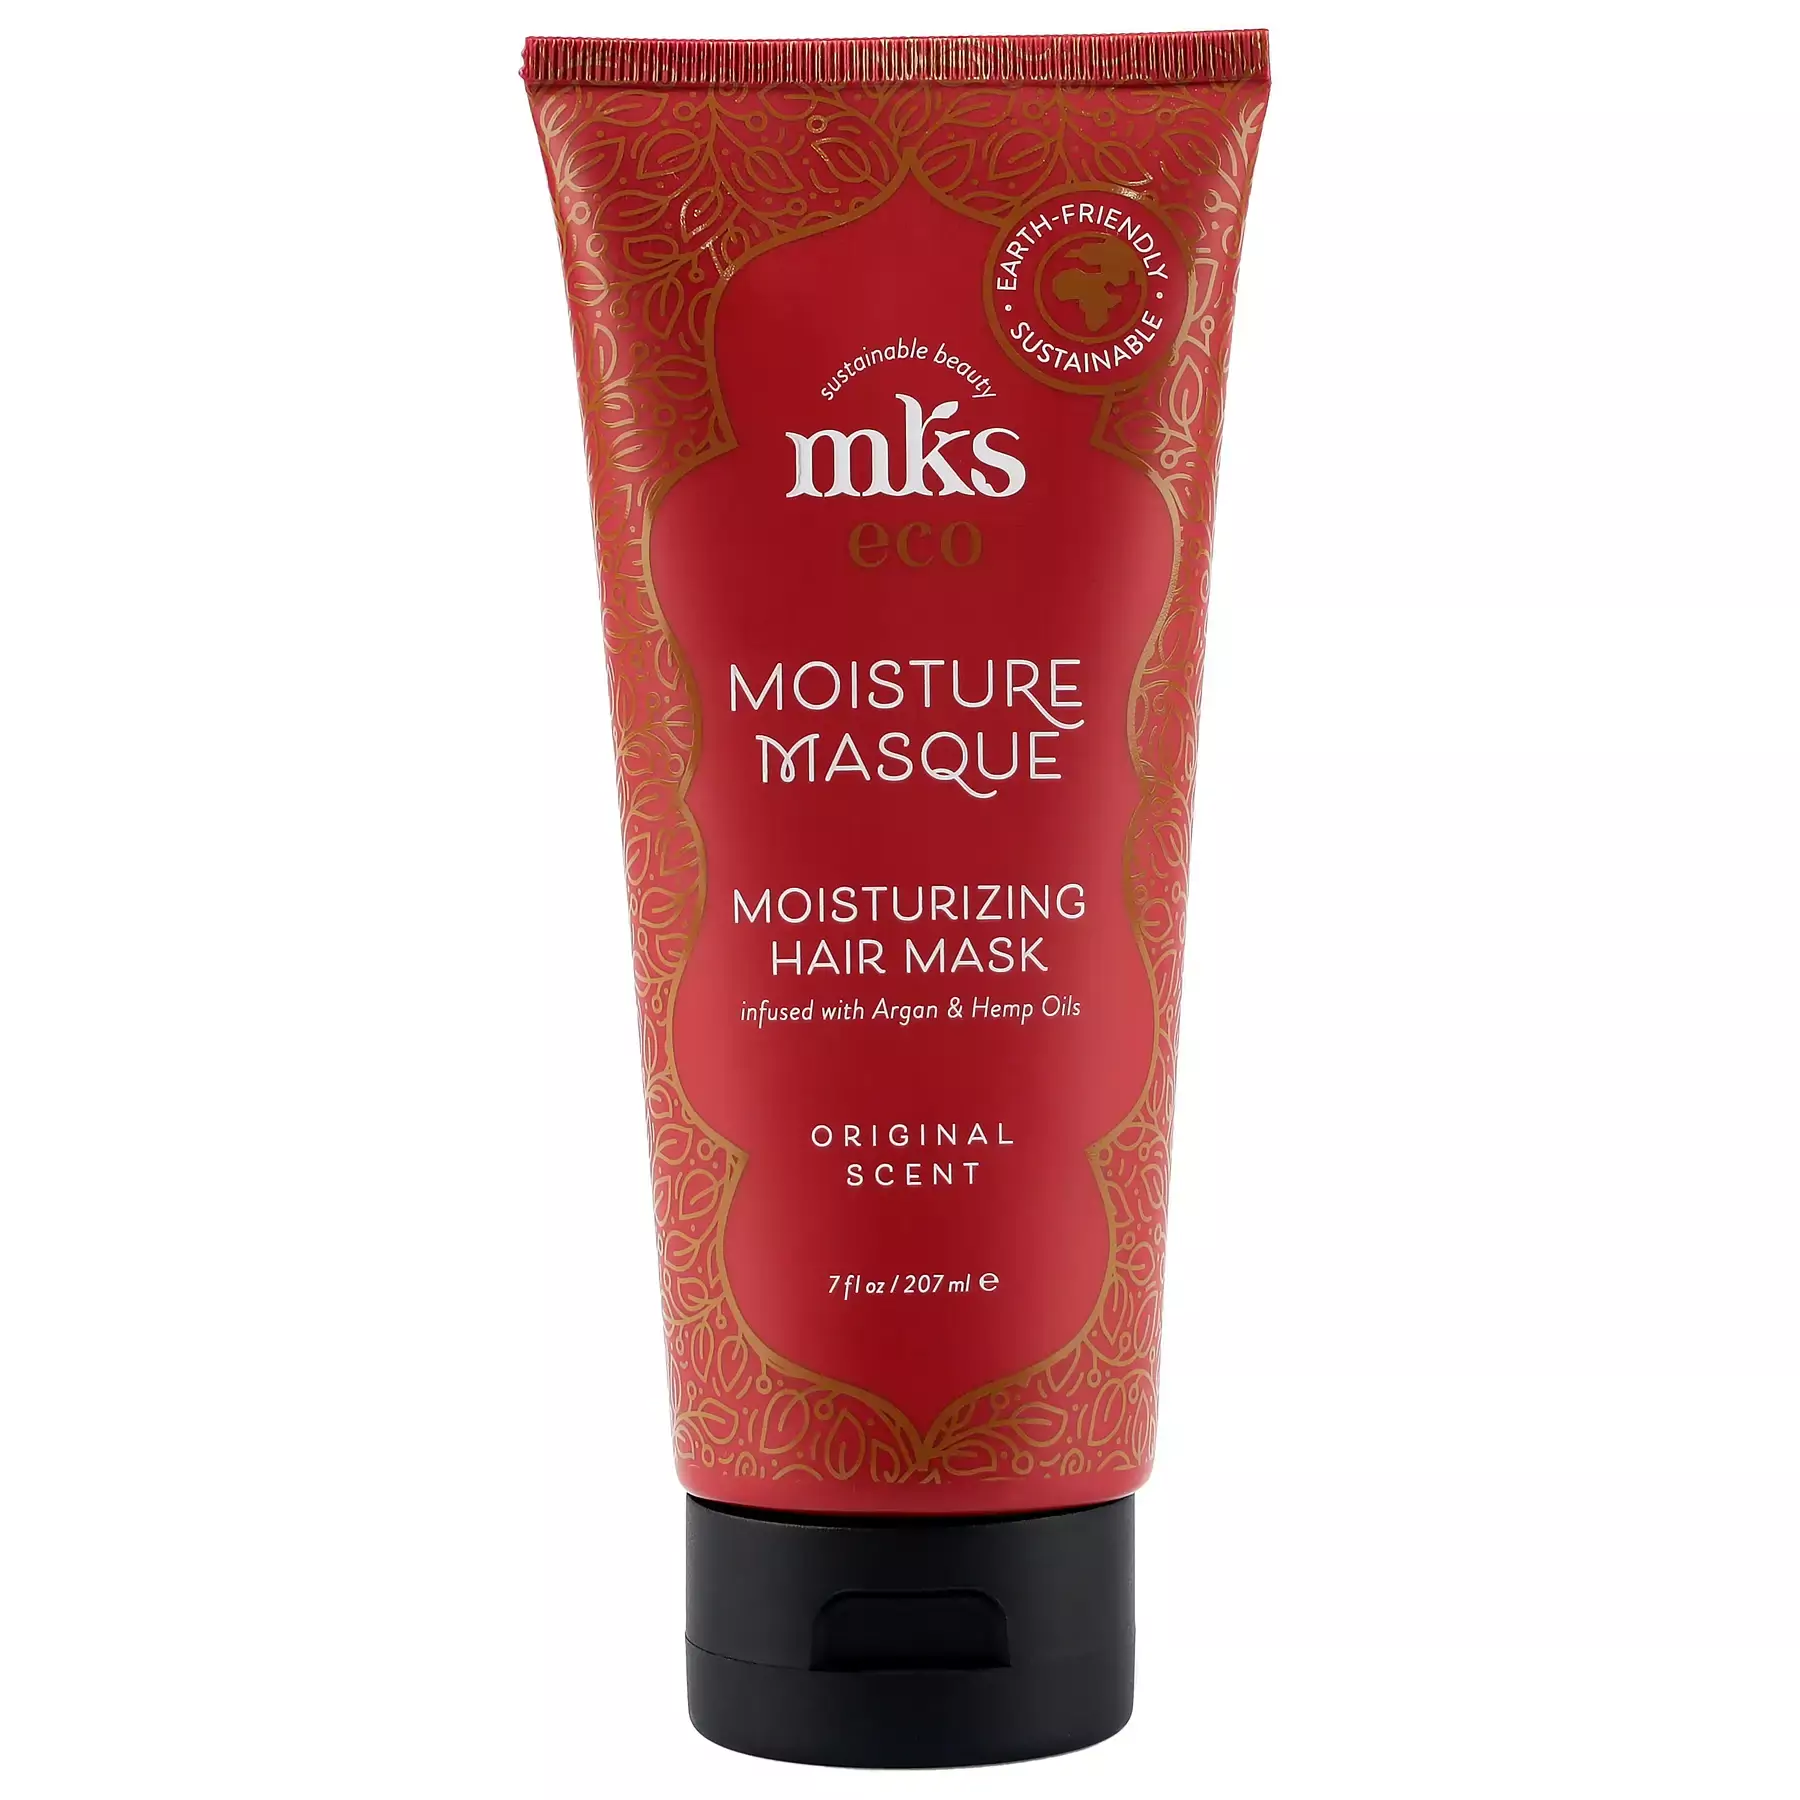 Увлажняющая маска для волос MKS-ECO Moisture Masque Moisturizing Hair Mask Original Scent 207 мл — фото №1